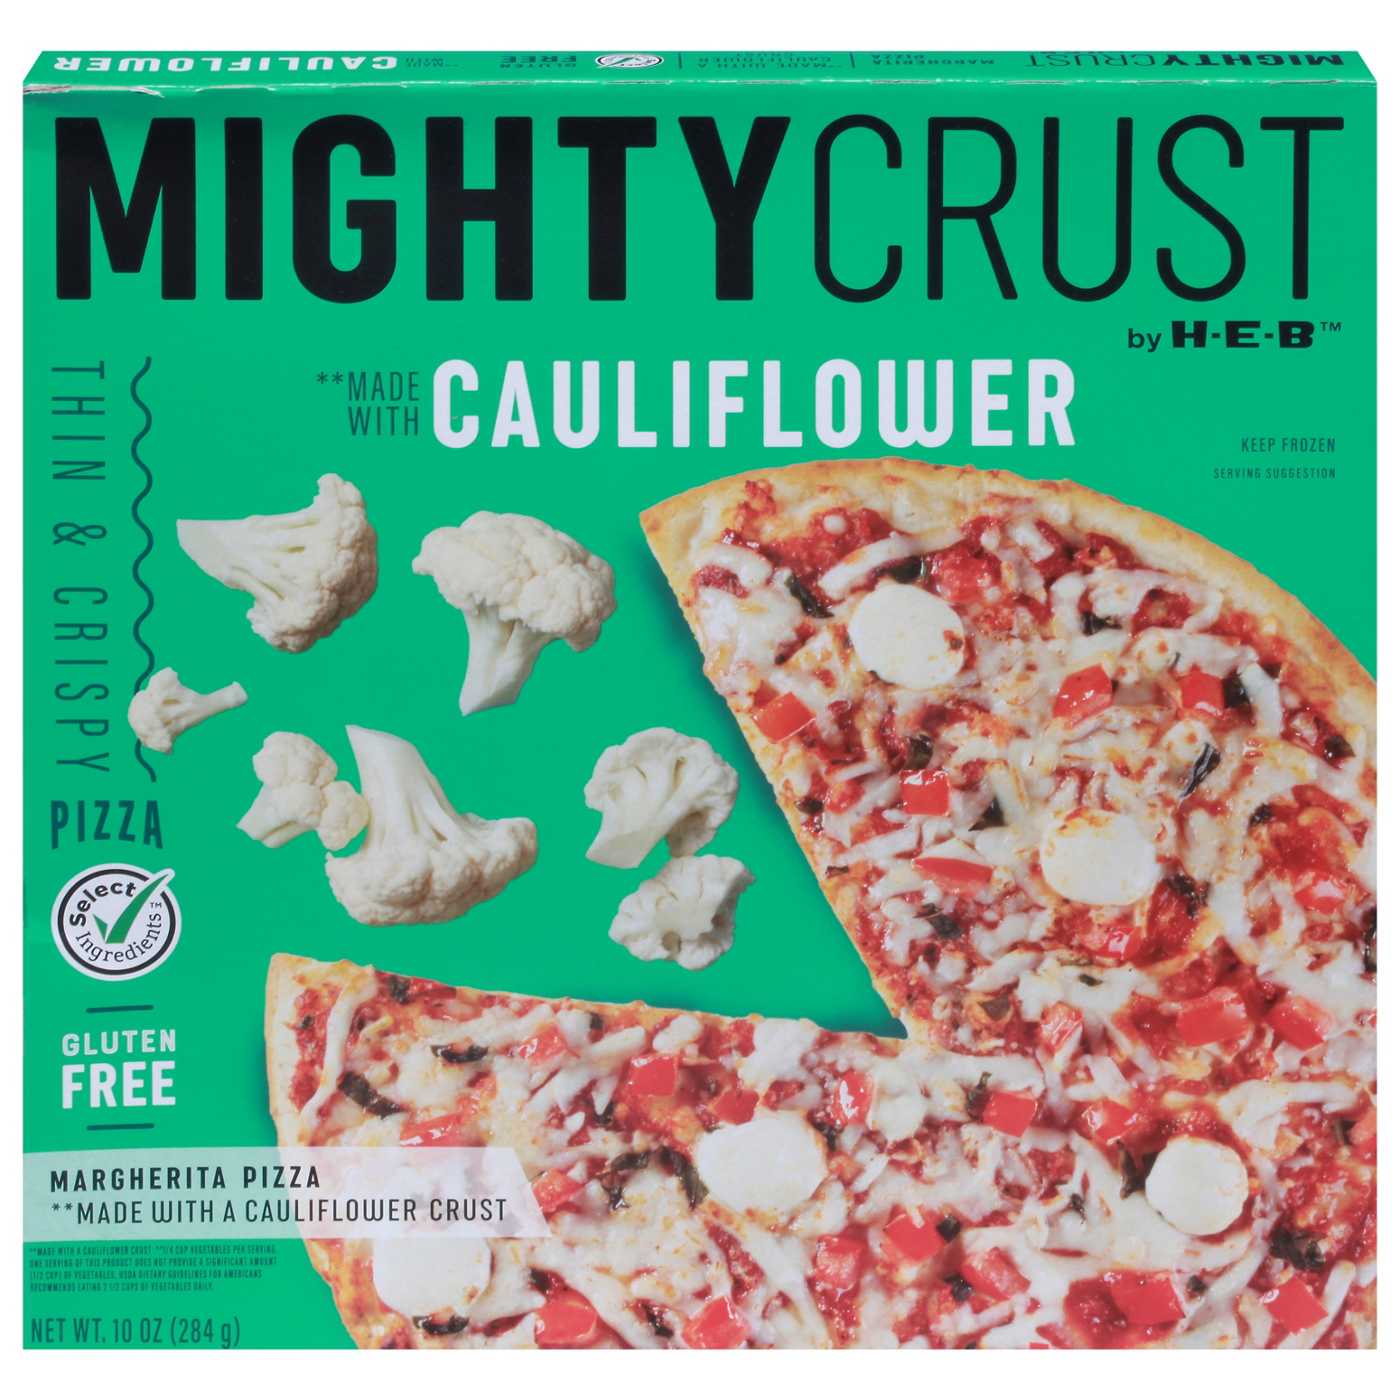 MightyCrust by H-E-B Frozen Cauliflower Pizza - Margherita; image 1 of 2